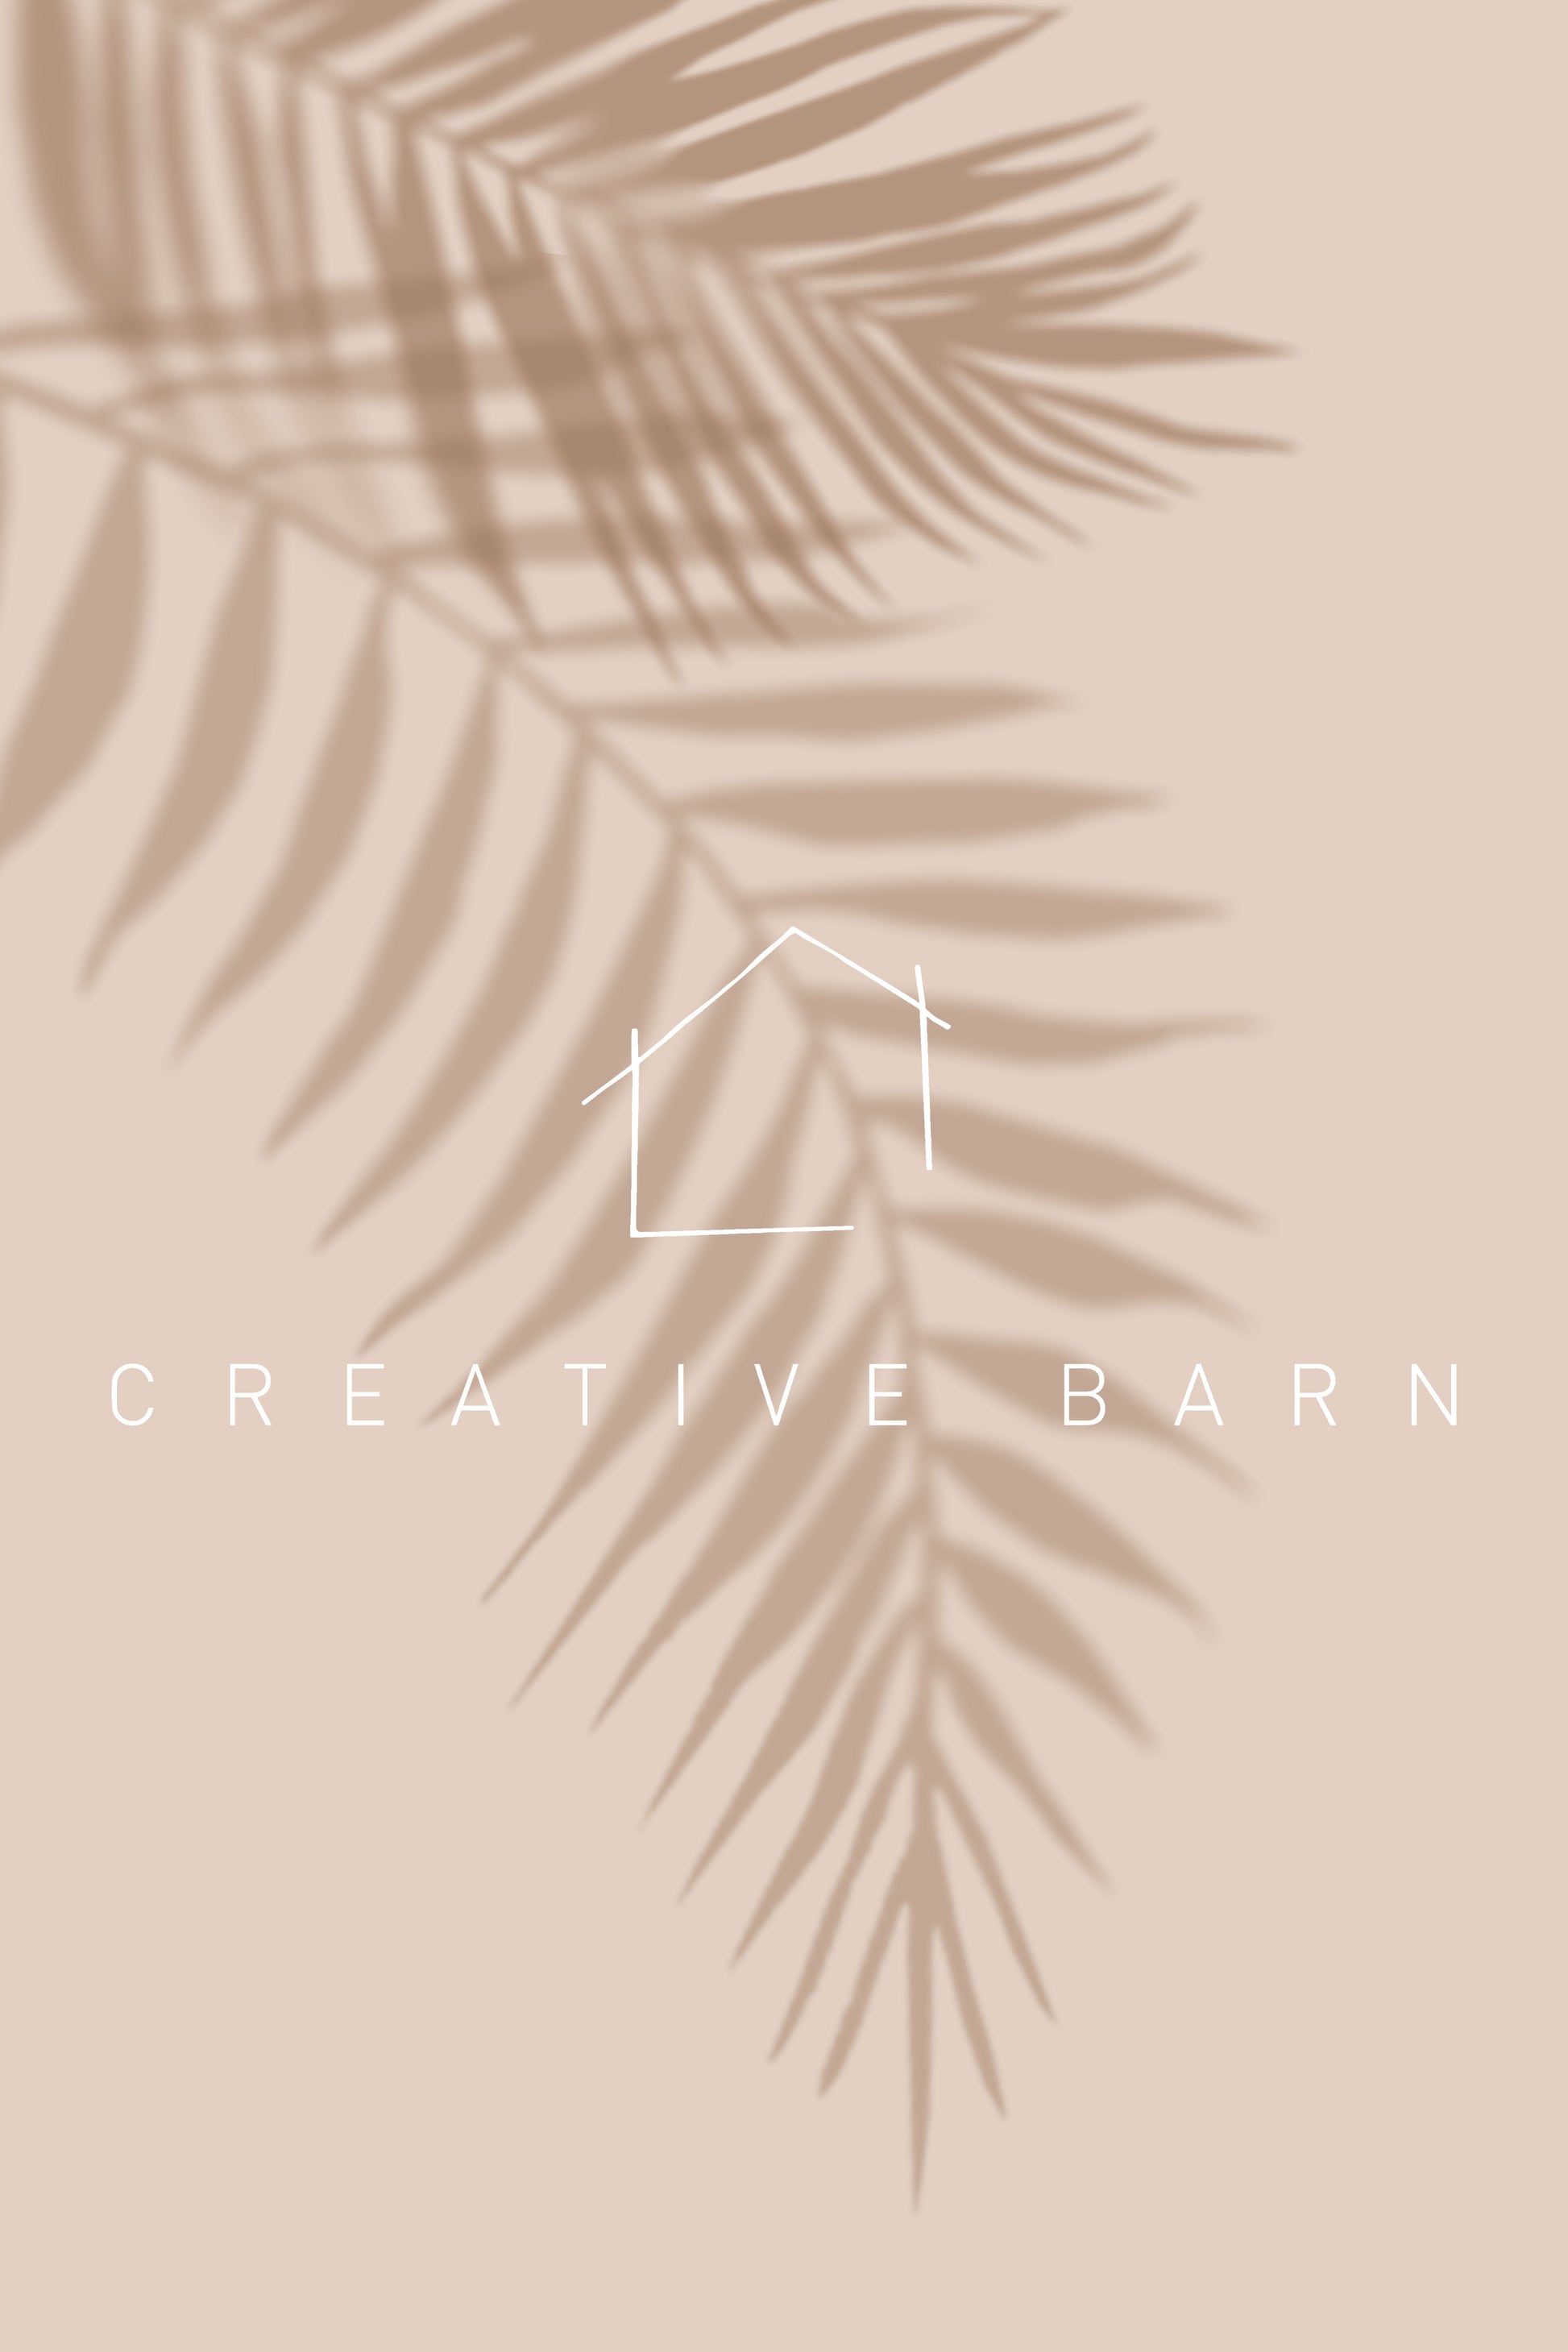 'Fern' - CreativeBarn